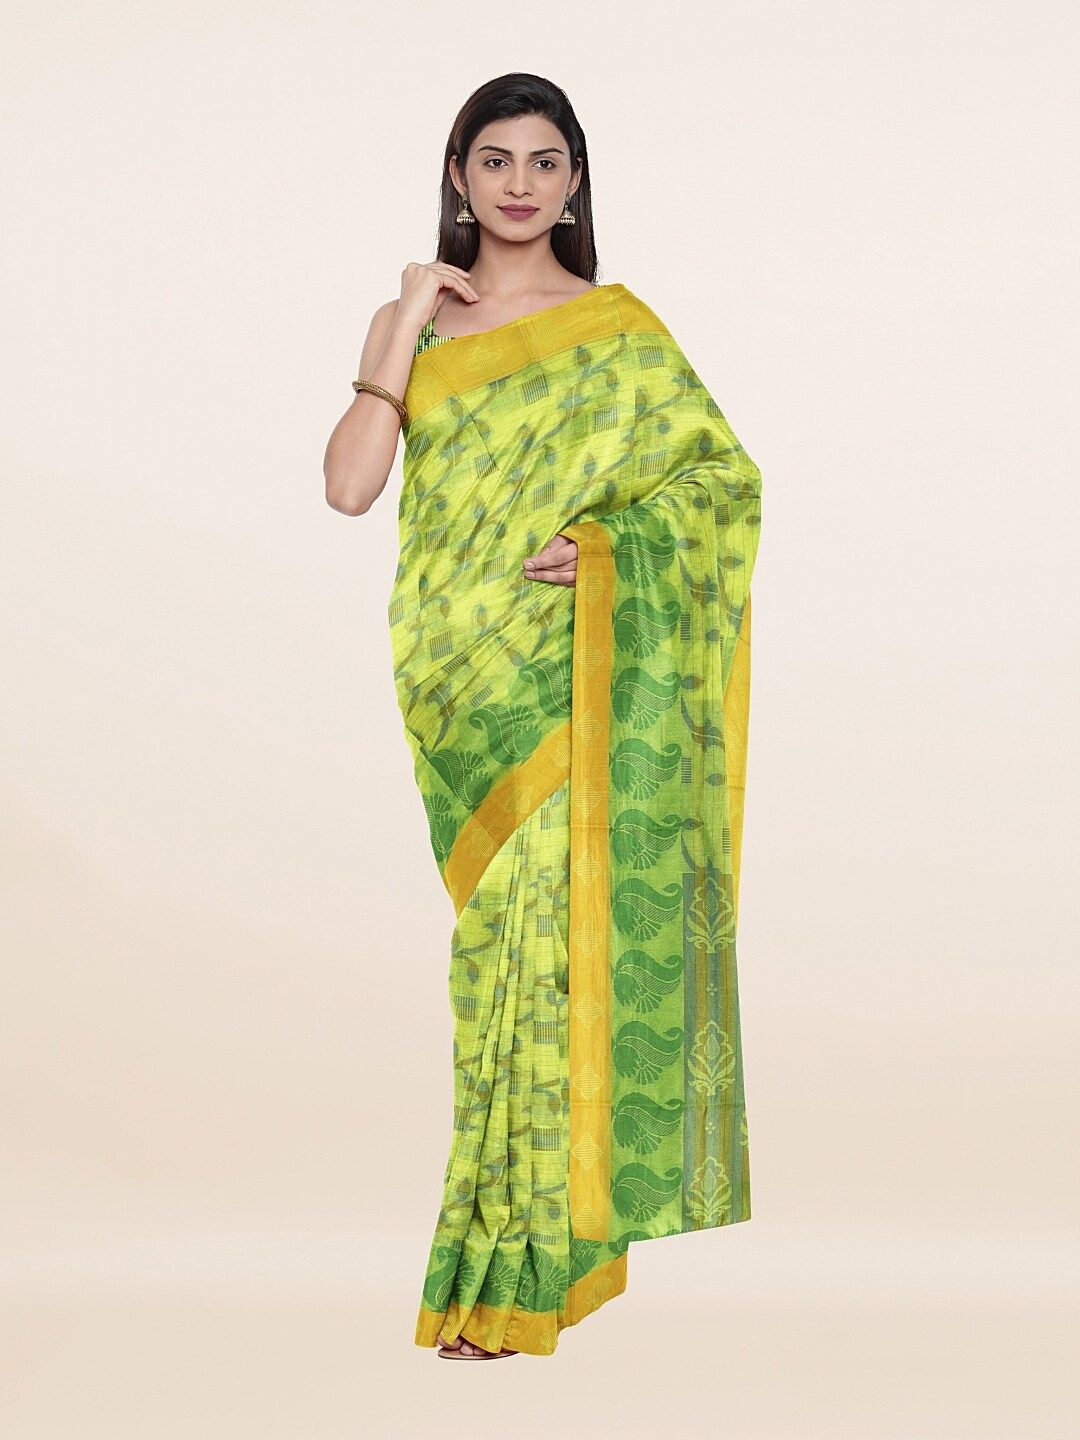 Pothys Green & Yellow Woven Design Saree Price in India